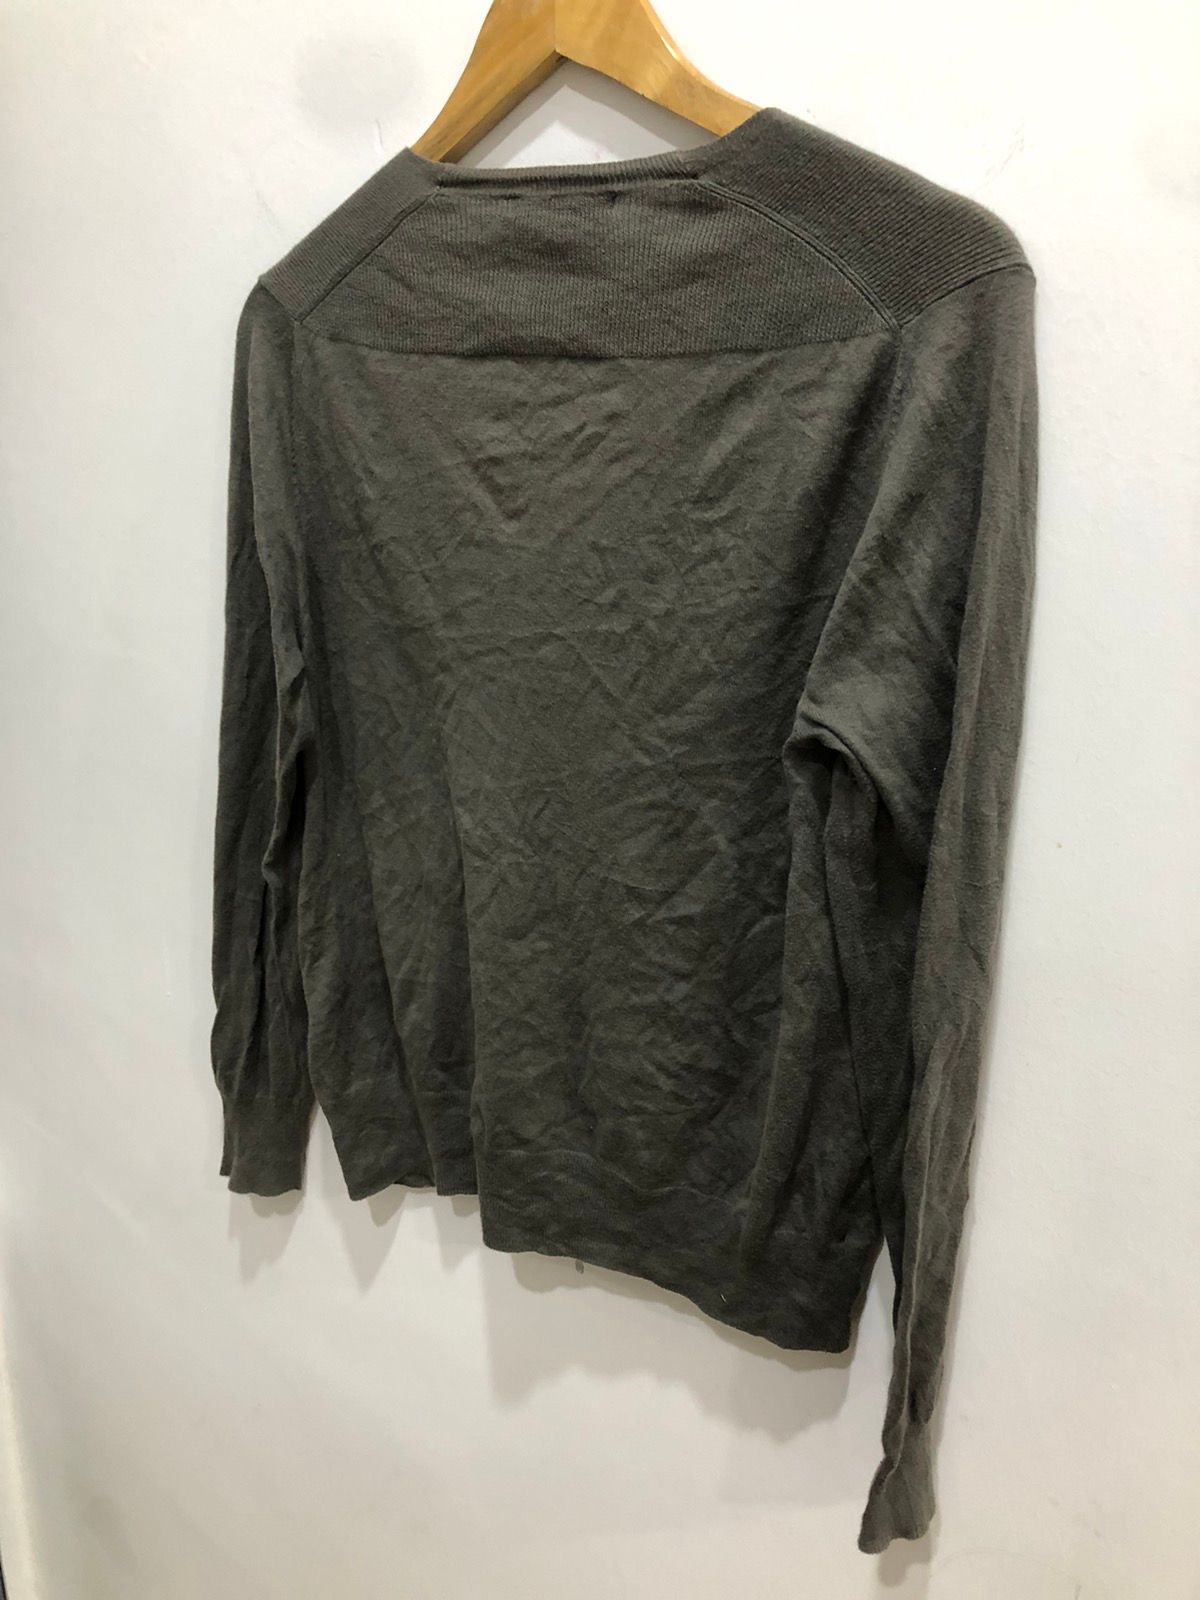 Ys for Living Cardigan Button Ups Kniterar Sweater - 10